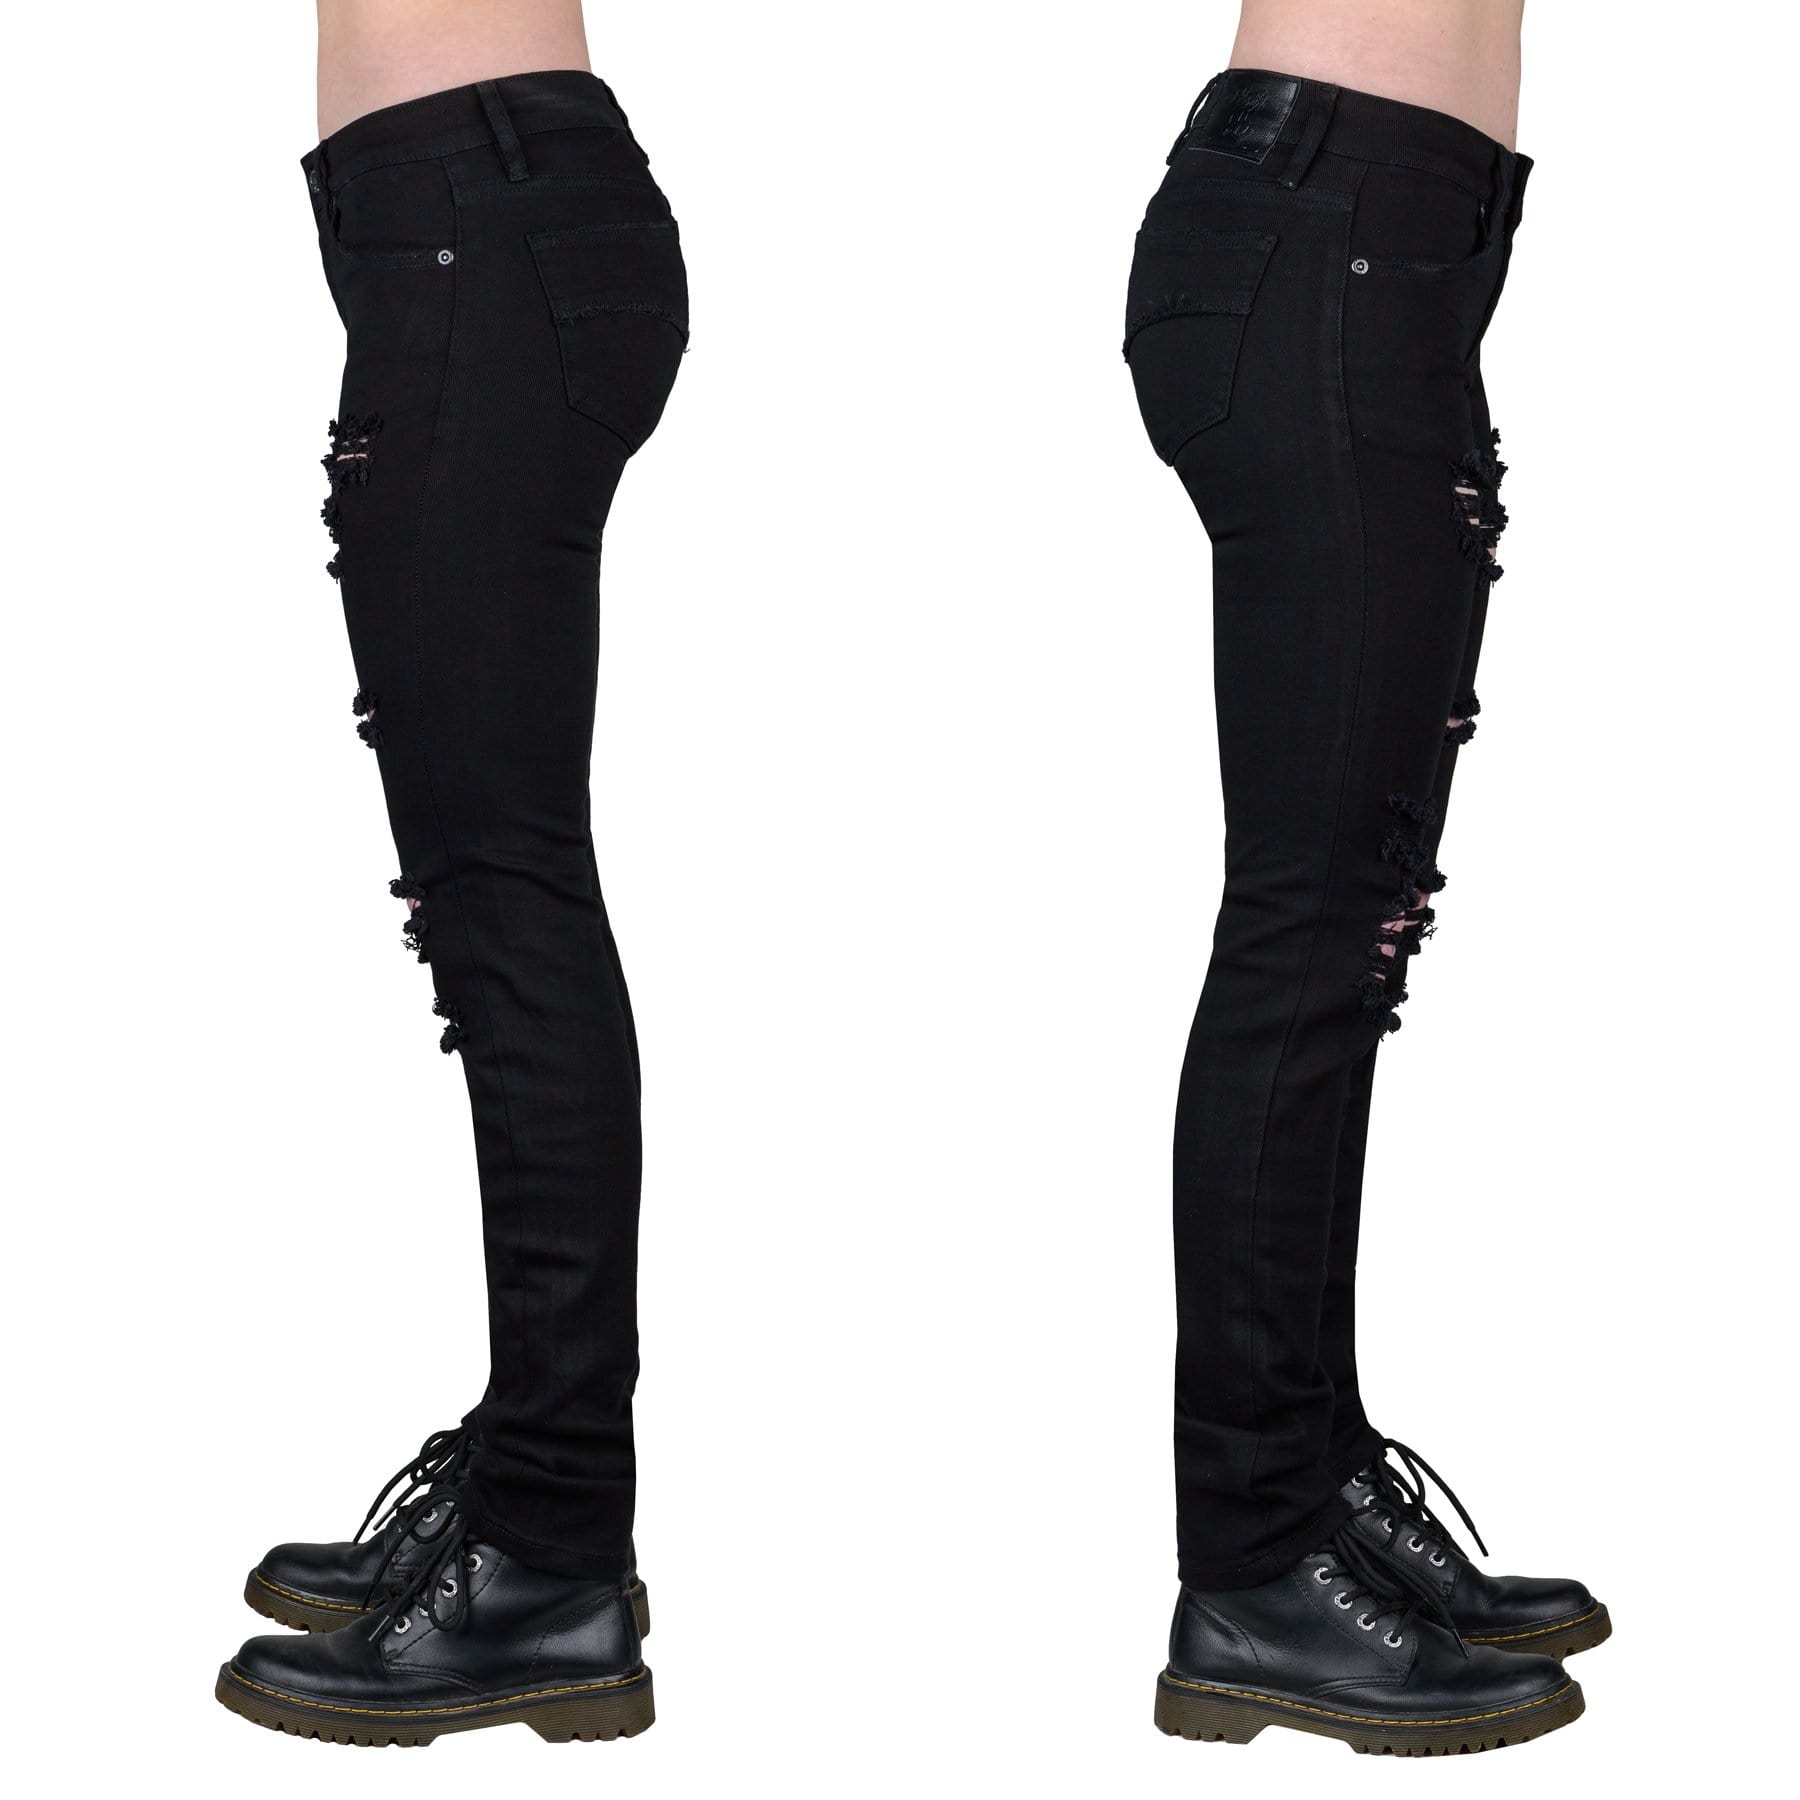 Wornstar Clothing Unisex Jeans. Rampager Shredded Denim Jeans - Black